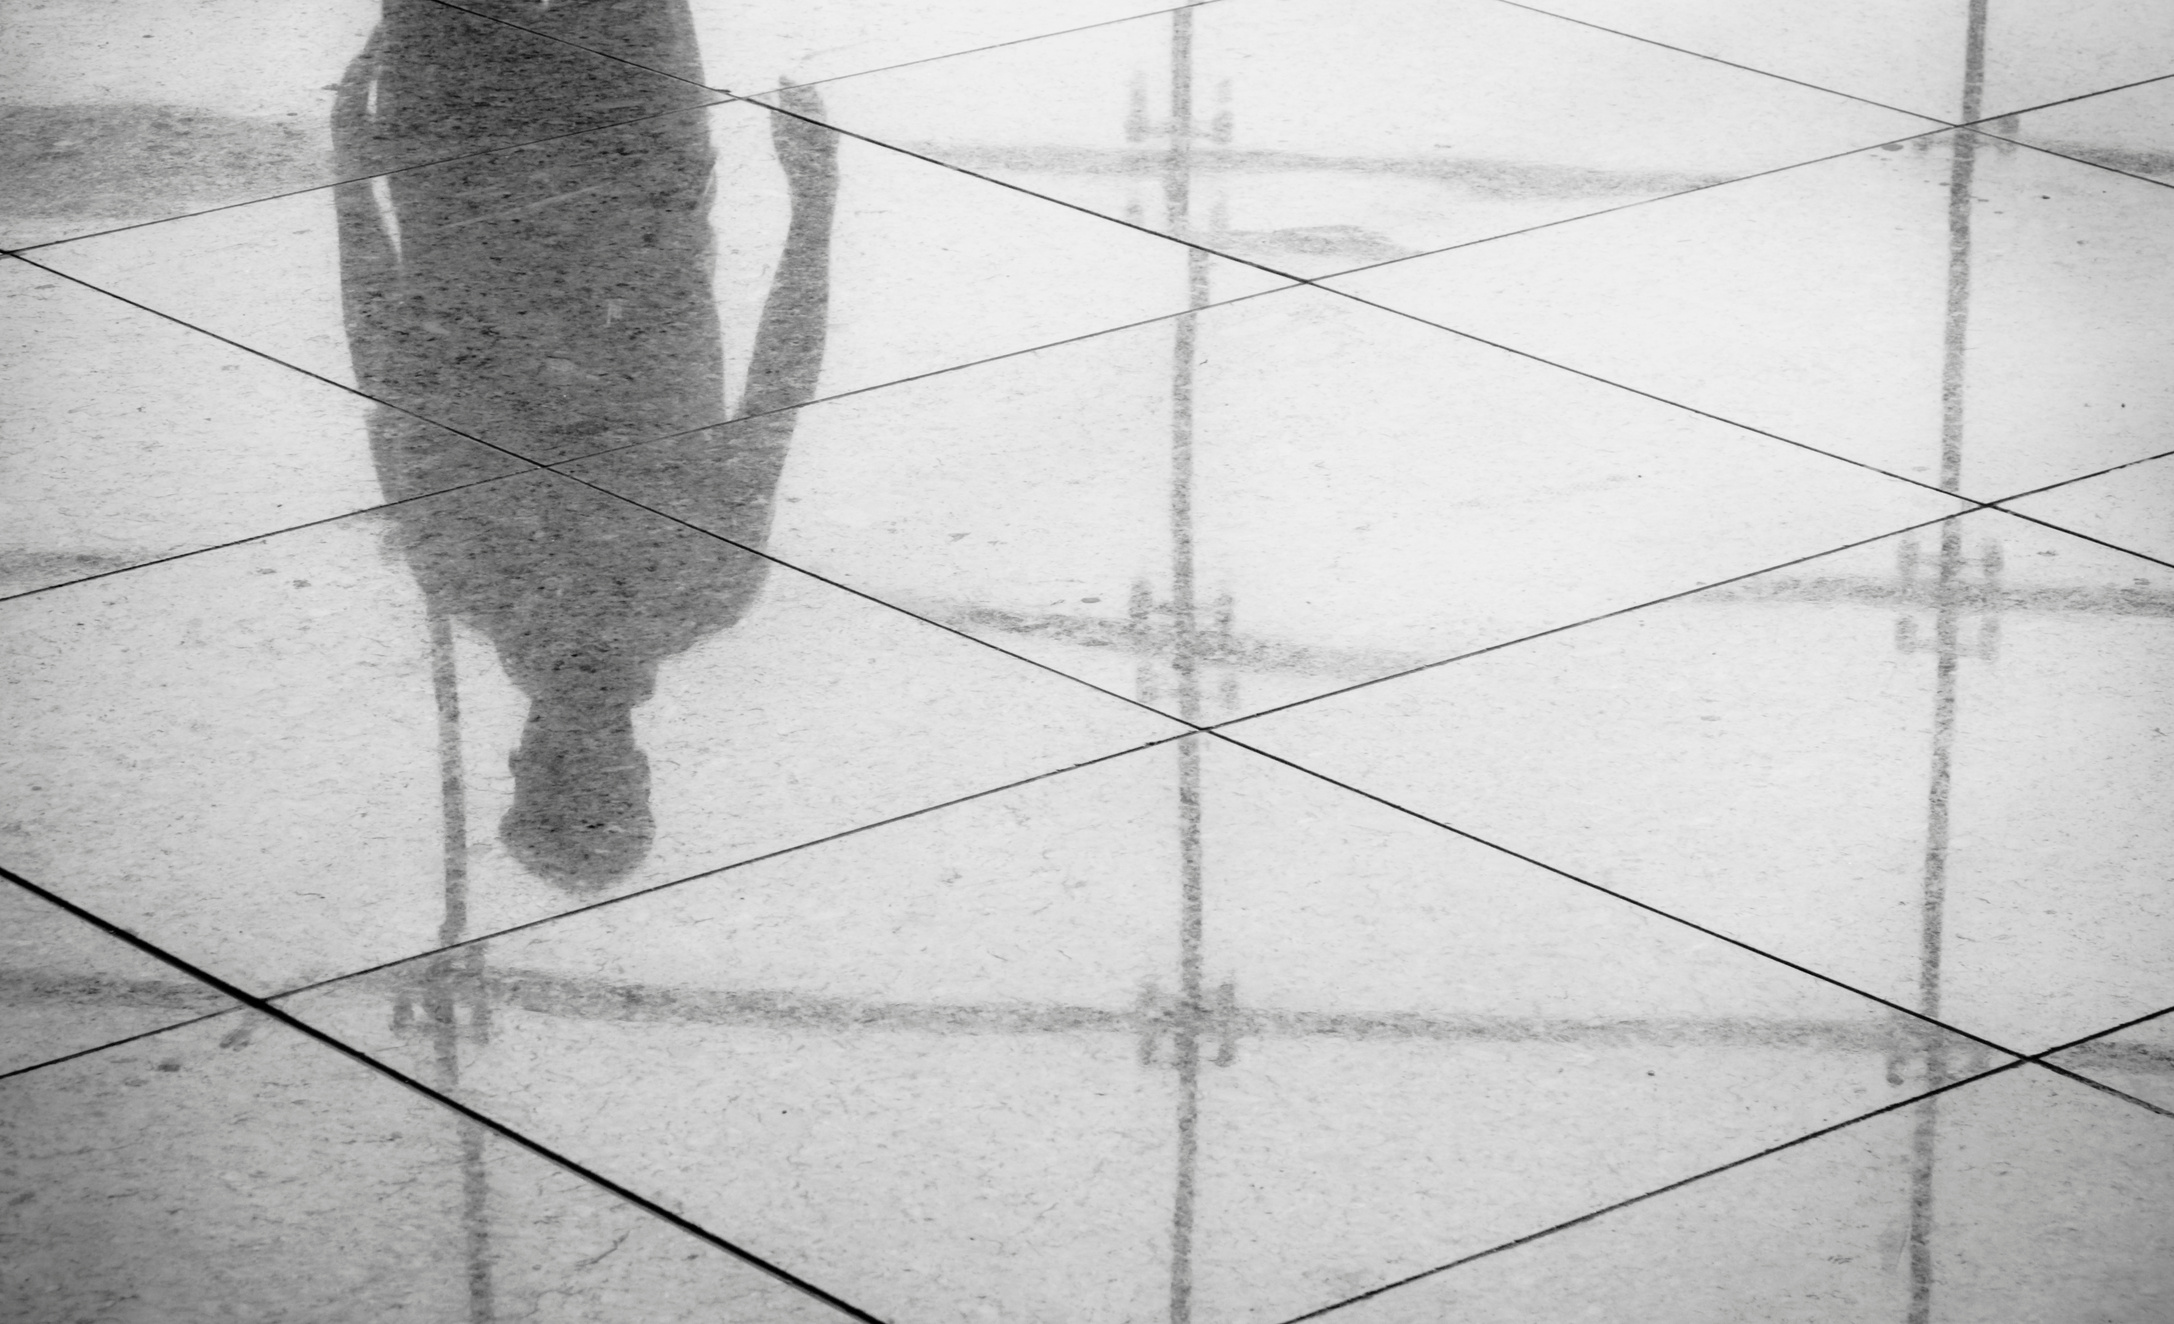 Man's reflection in lobby's shiny tile floor